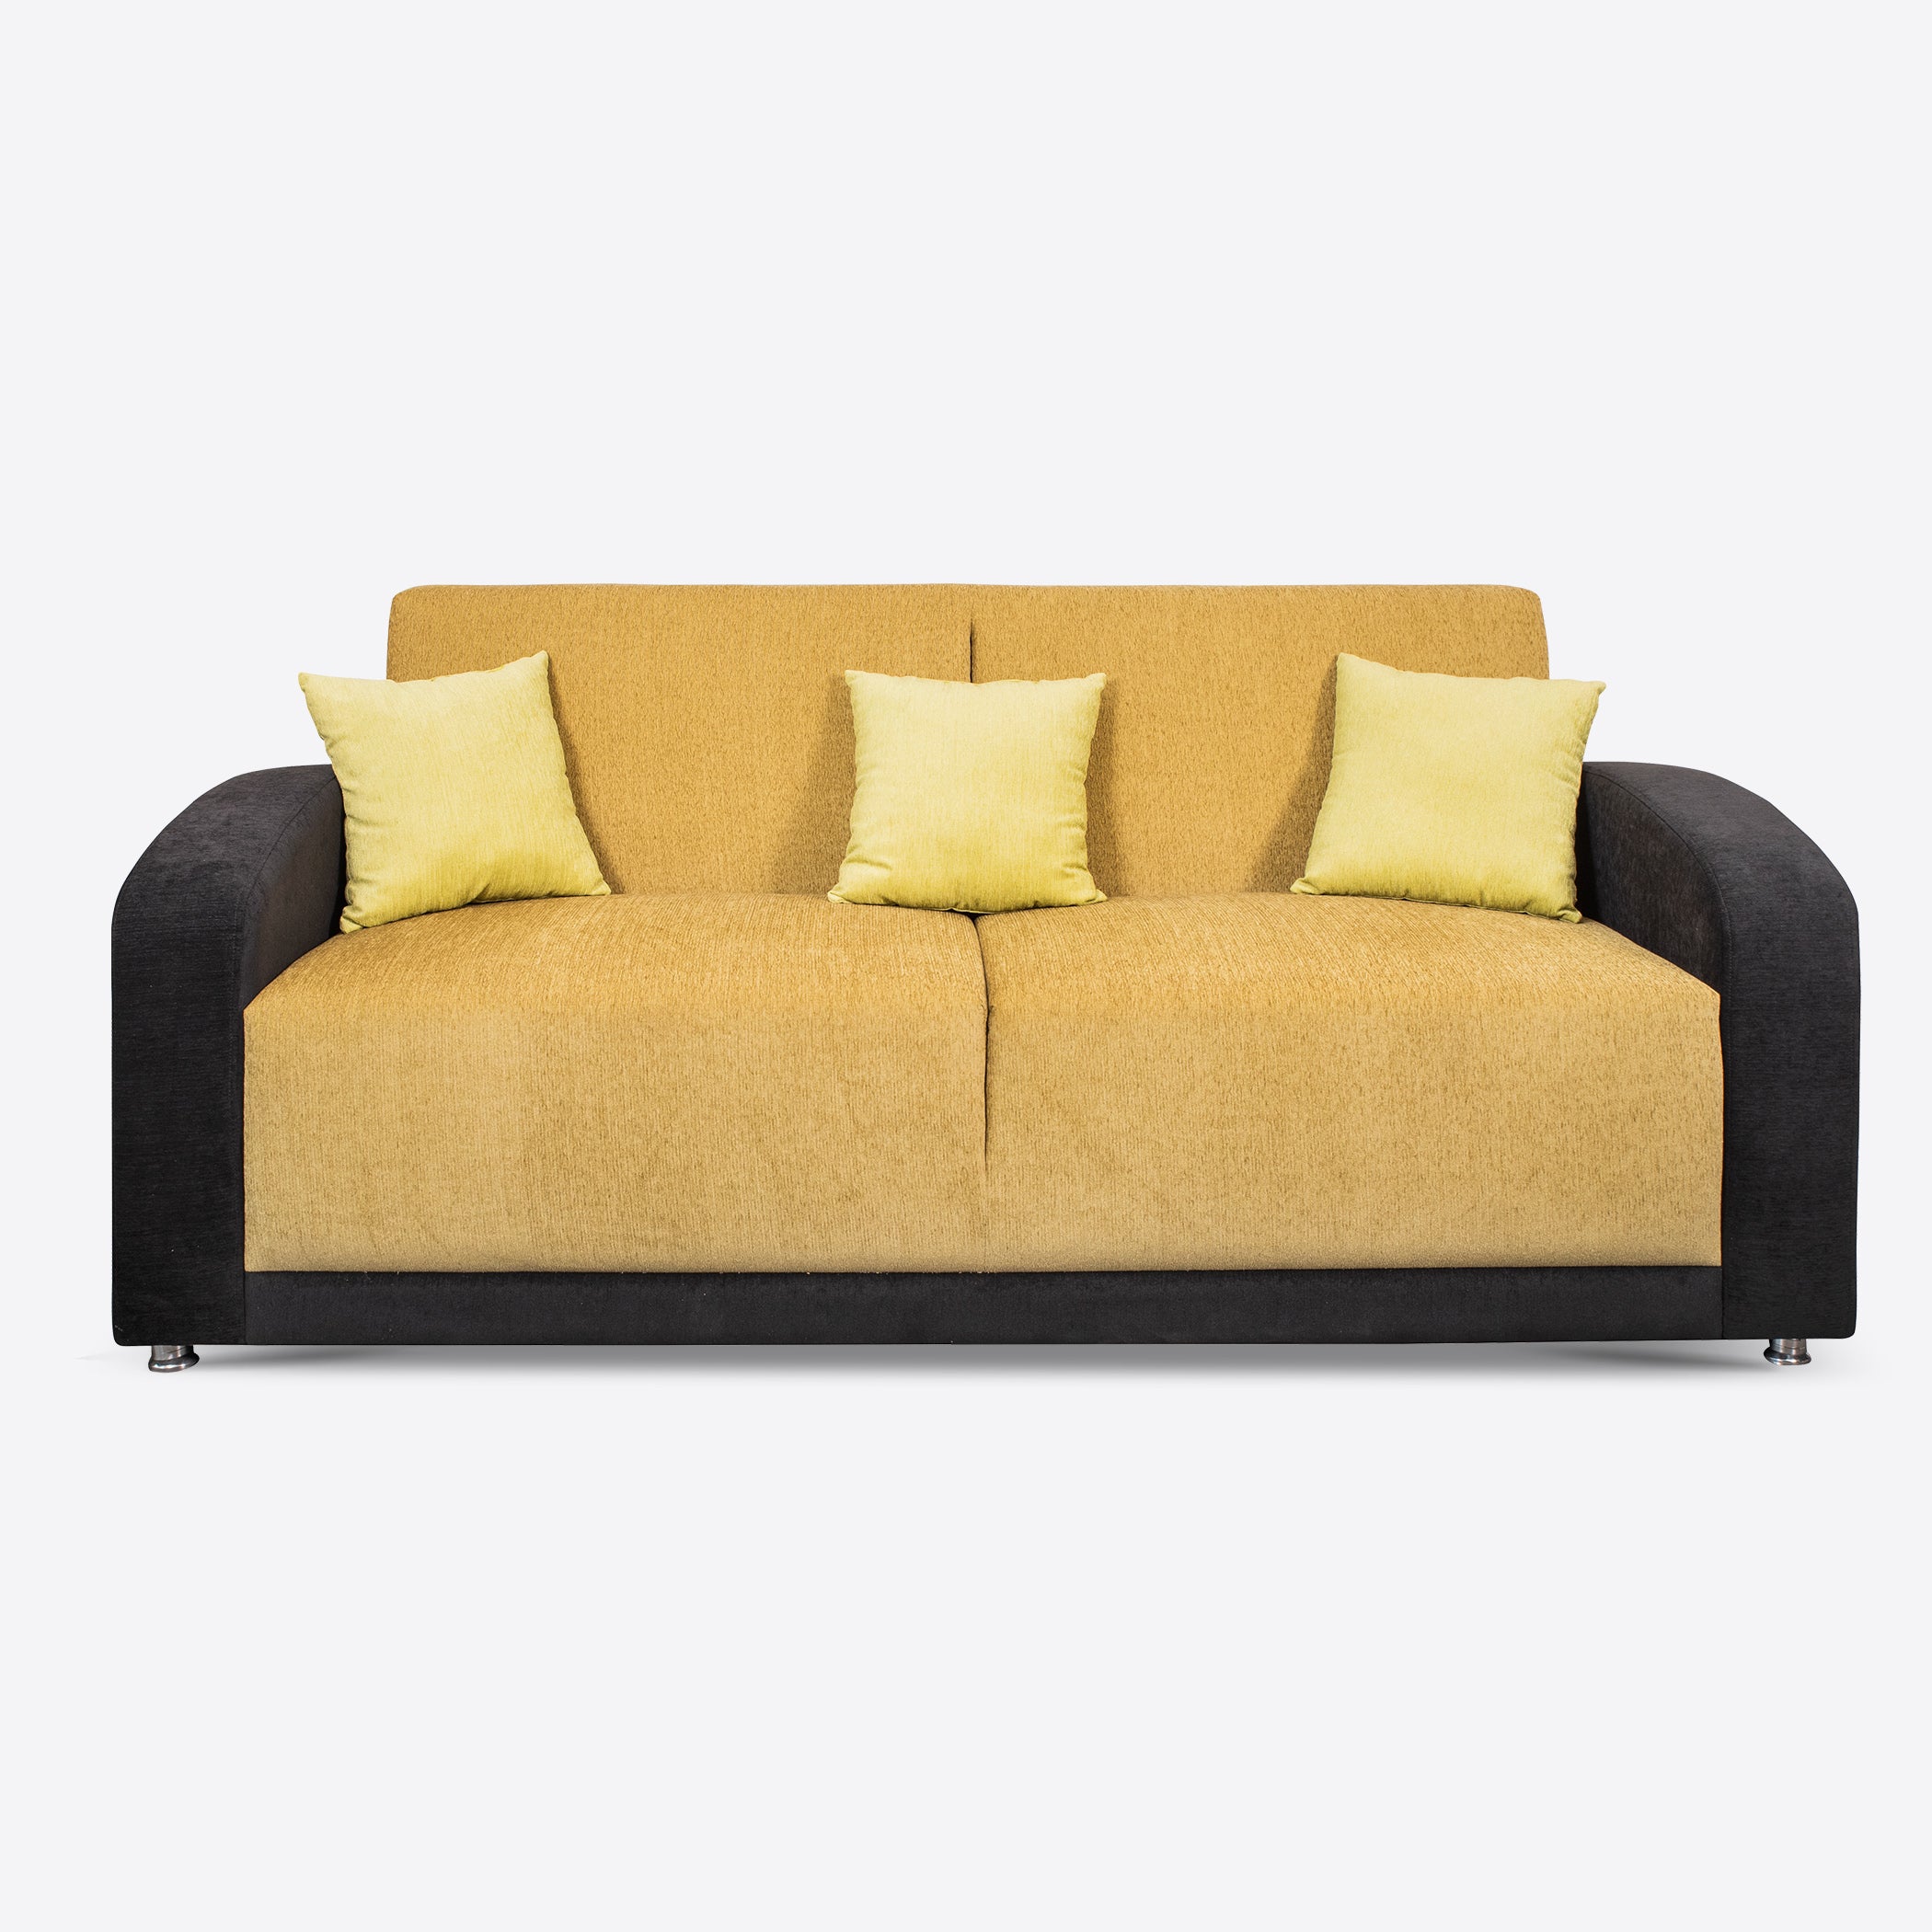 Swiss BlackYellow 3S Sofa by Zorin Zorin